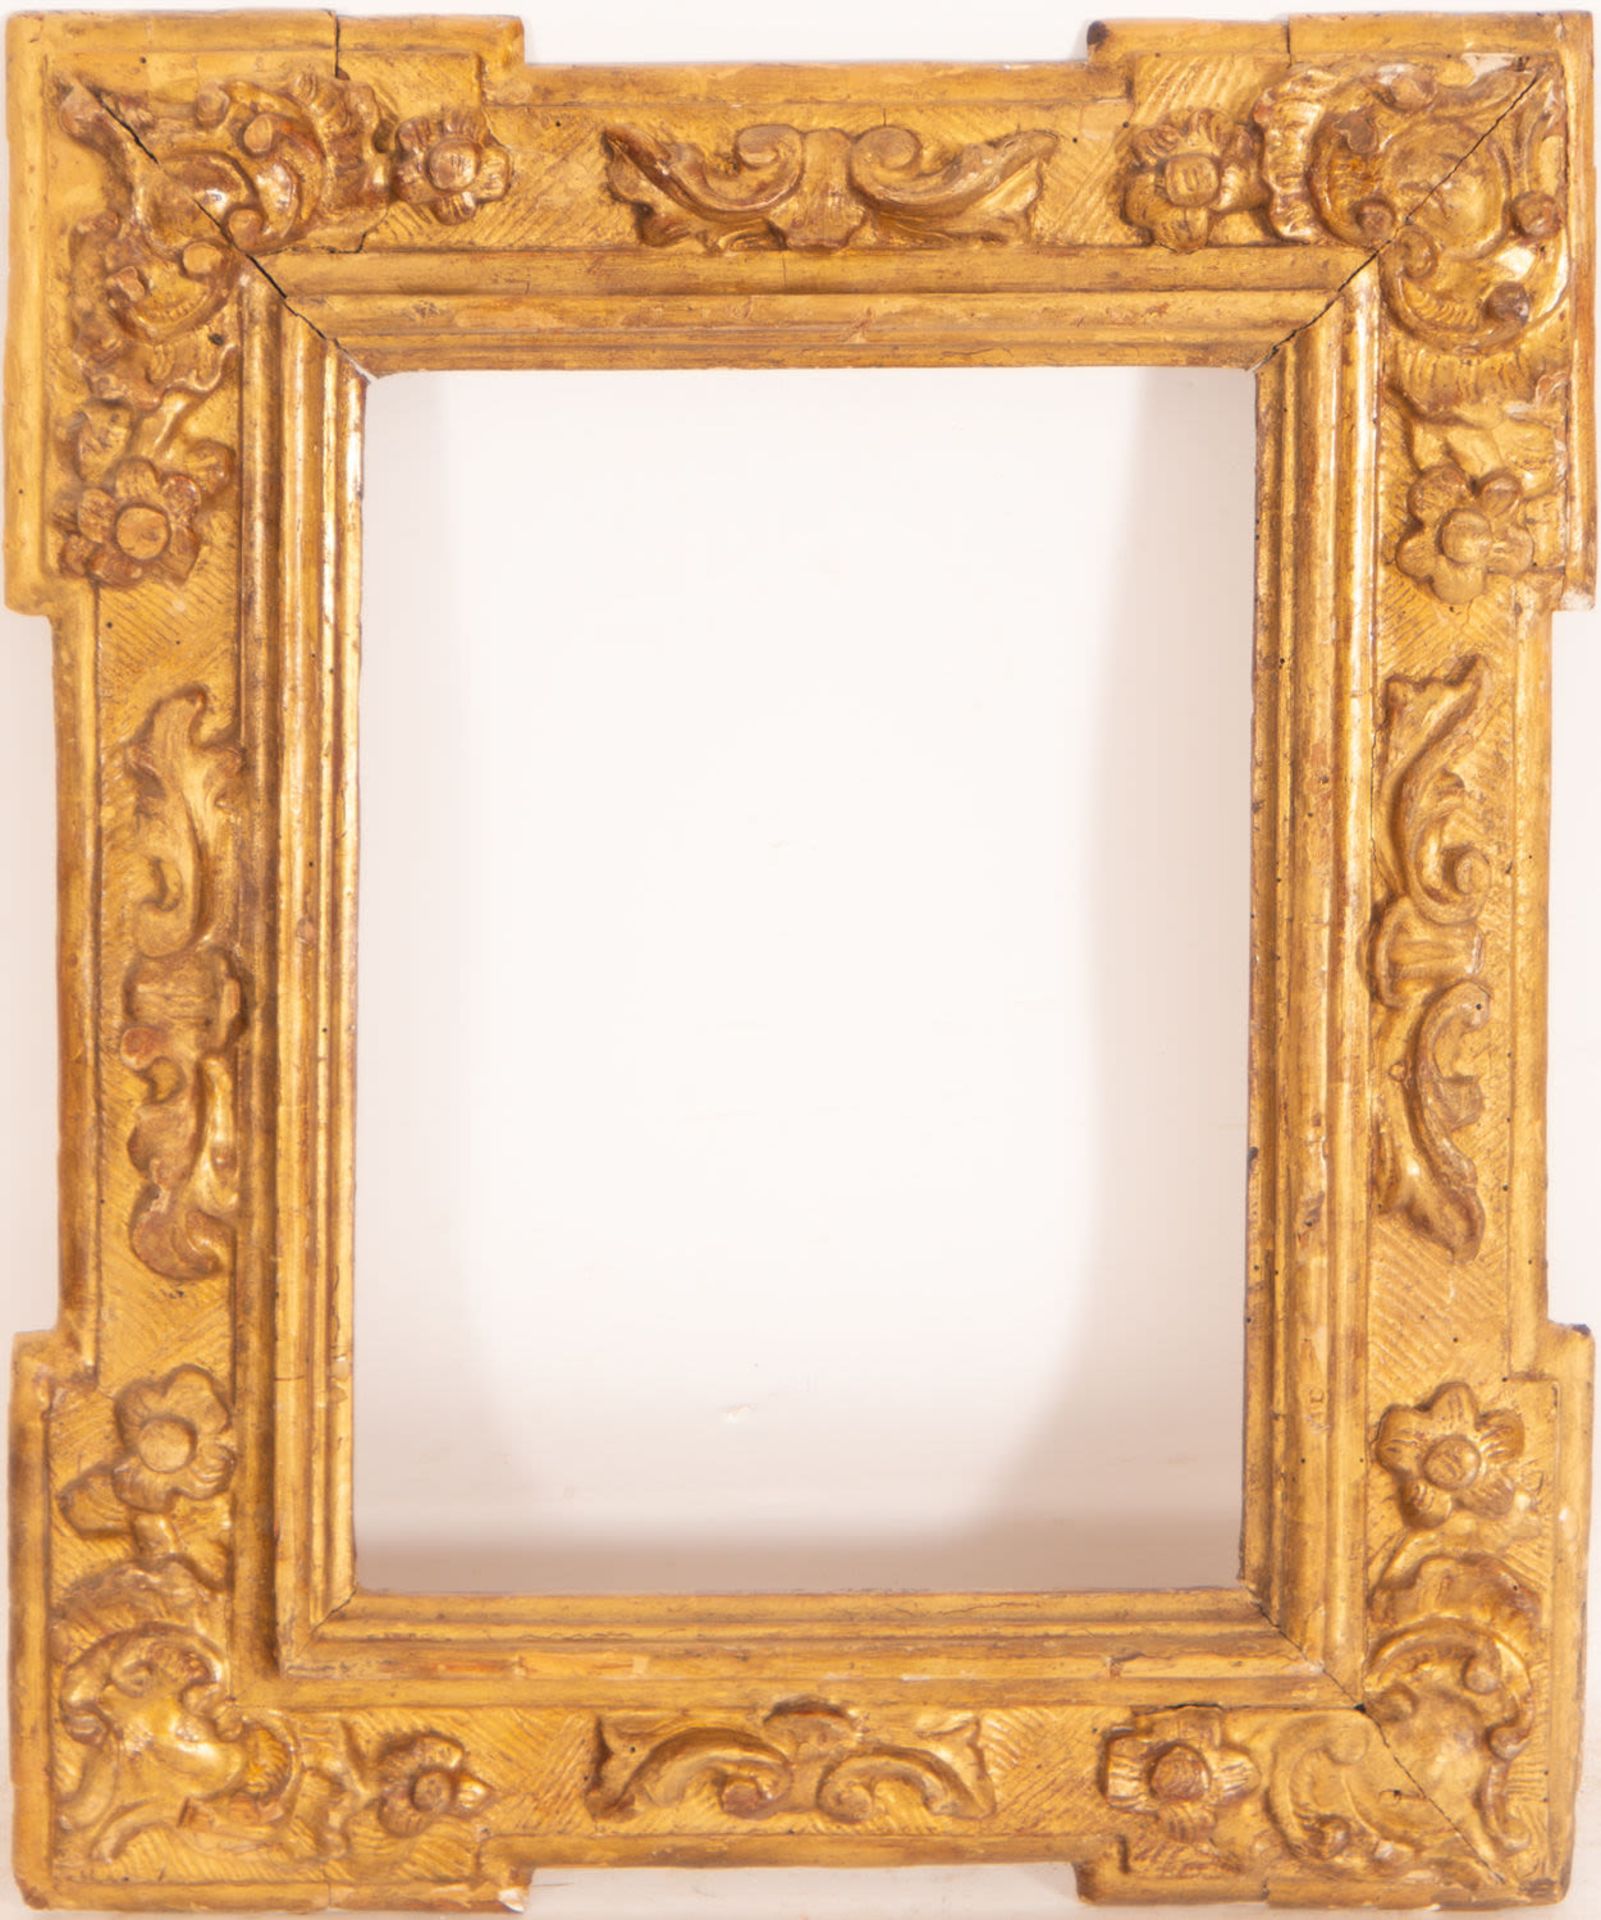 Spanish Giltwood Frame, XVII - XVIII centuries